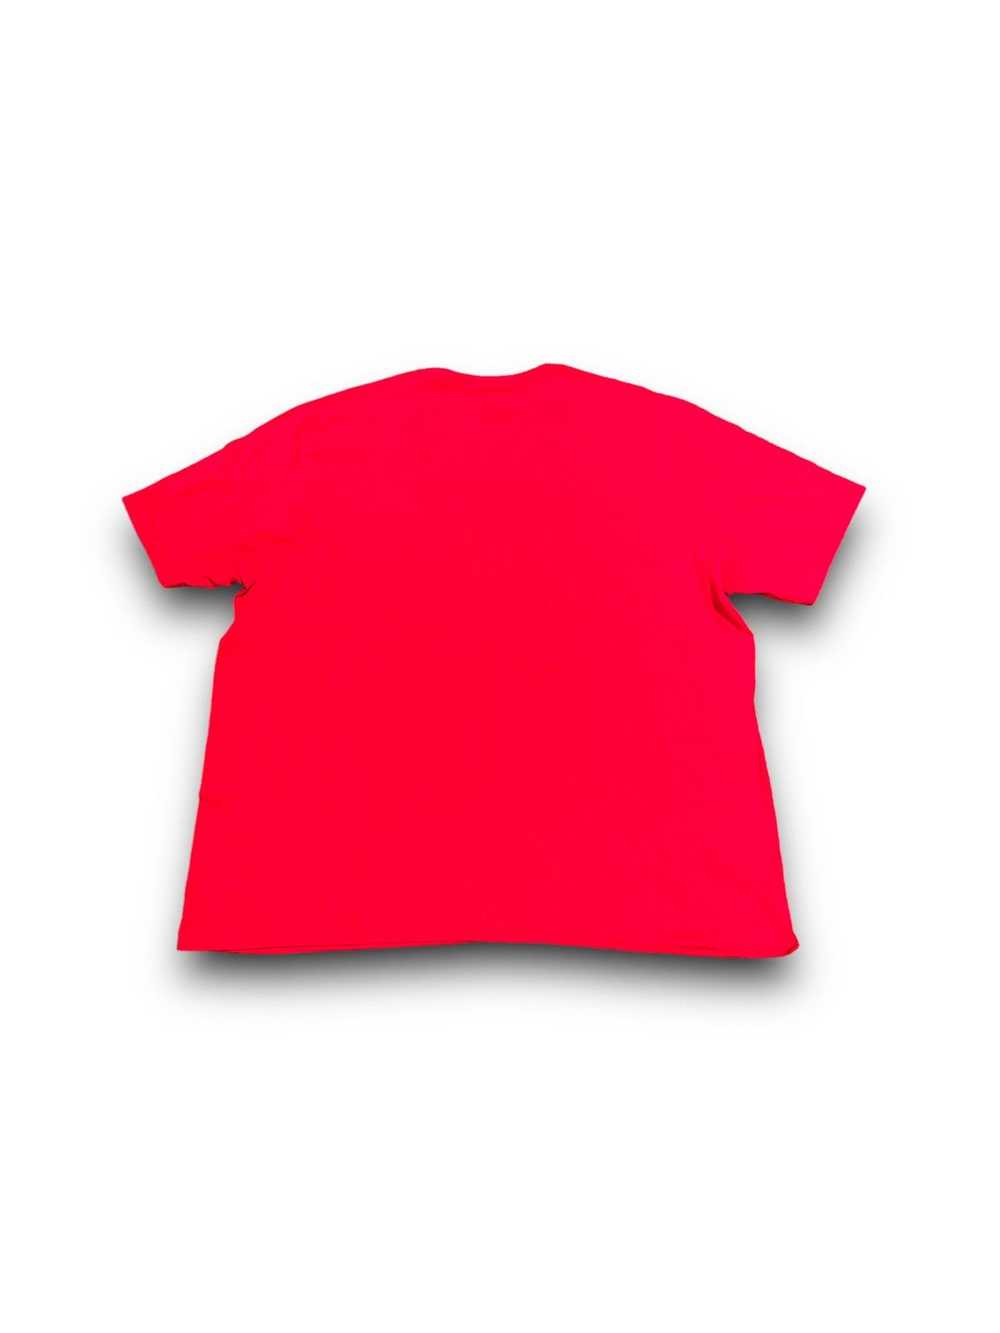 NFL Kansas City chiefs t-shirt size 4XL - image 3